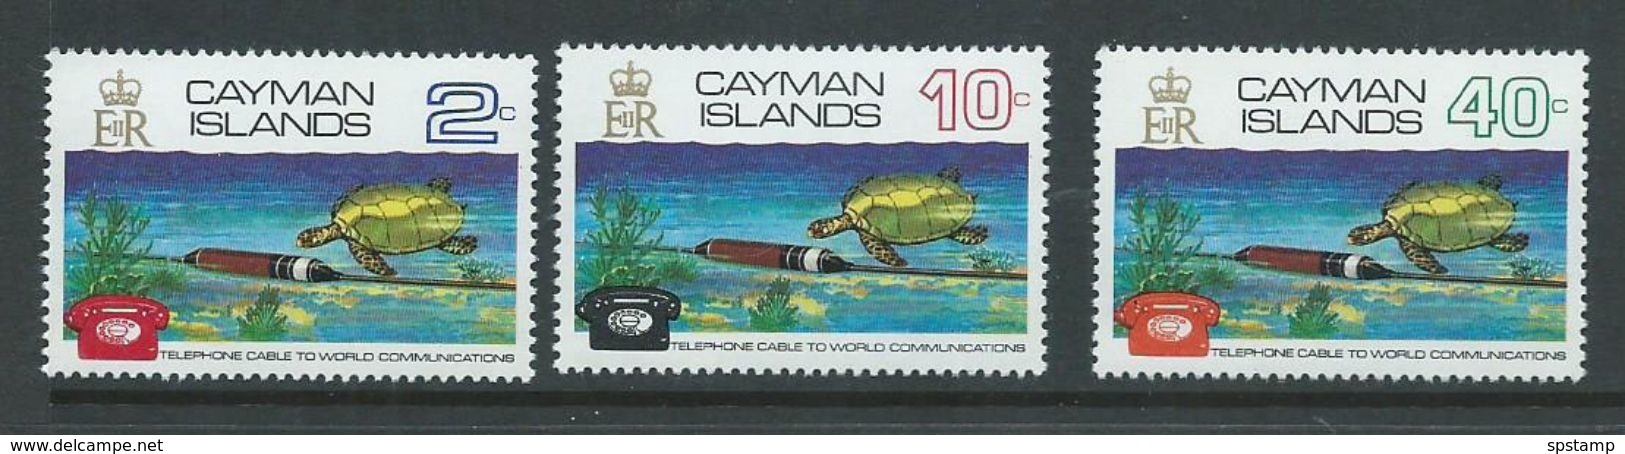 Cayman Islands 1972 Telephone Cable Set 3 MNH - Cayman Islands